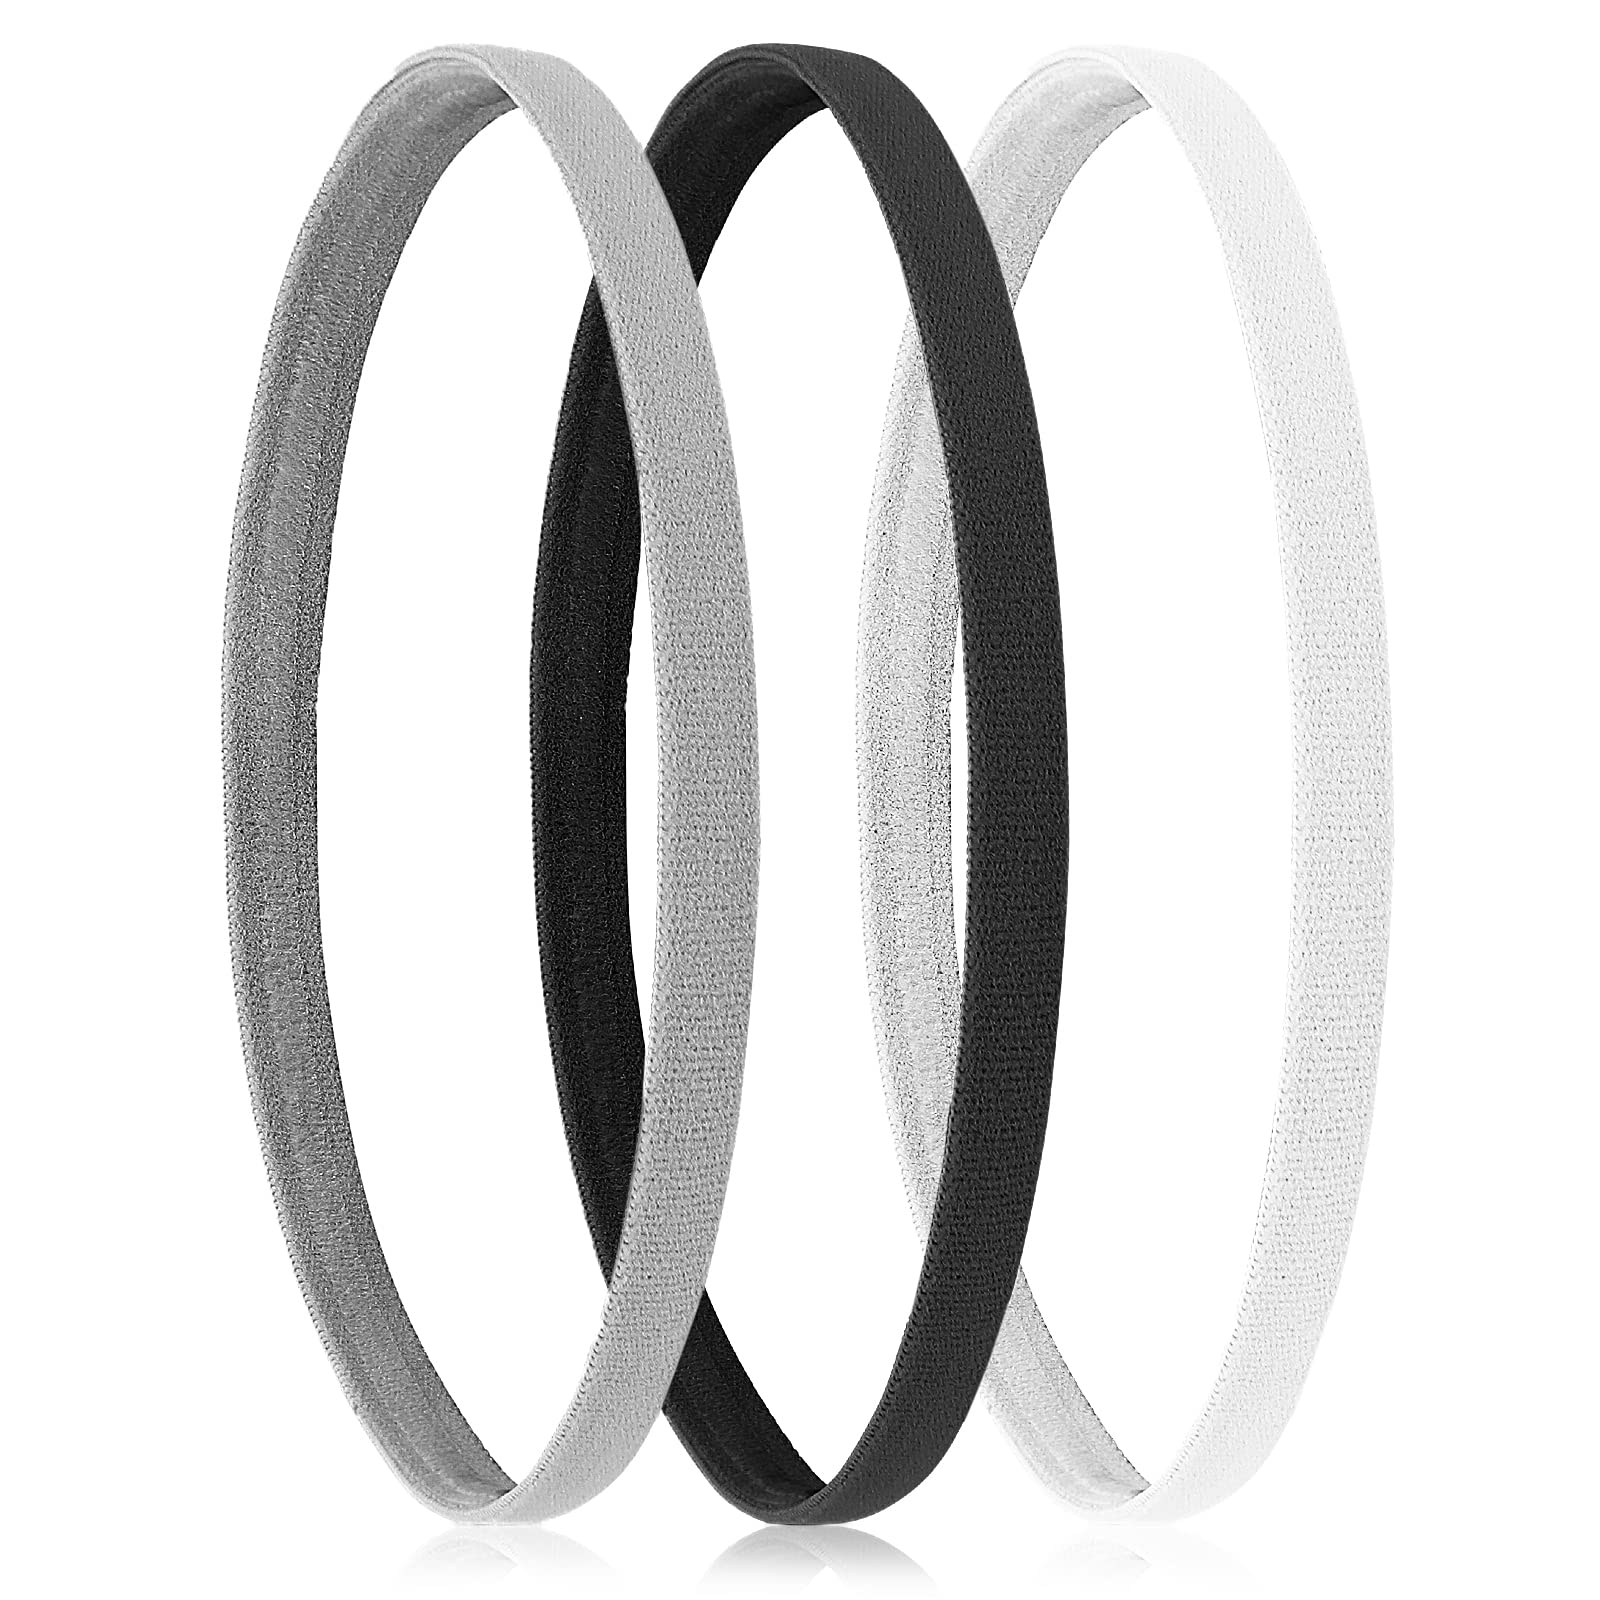 Thin Elastic Headbands - Black, Gray + White